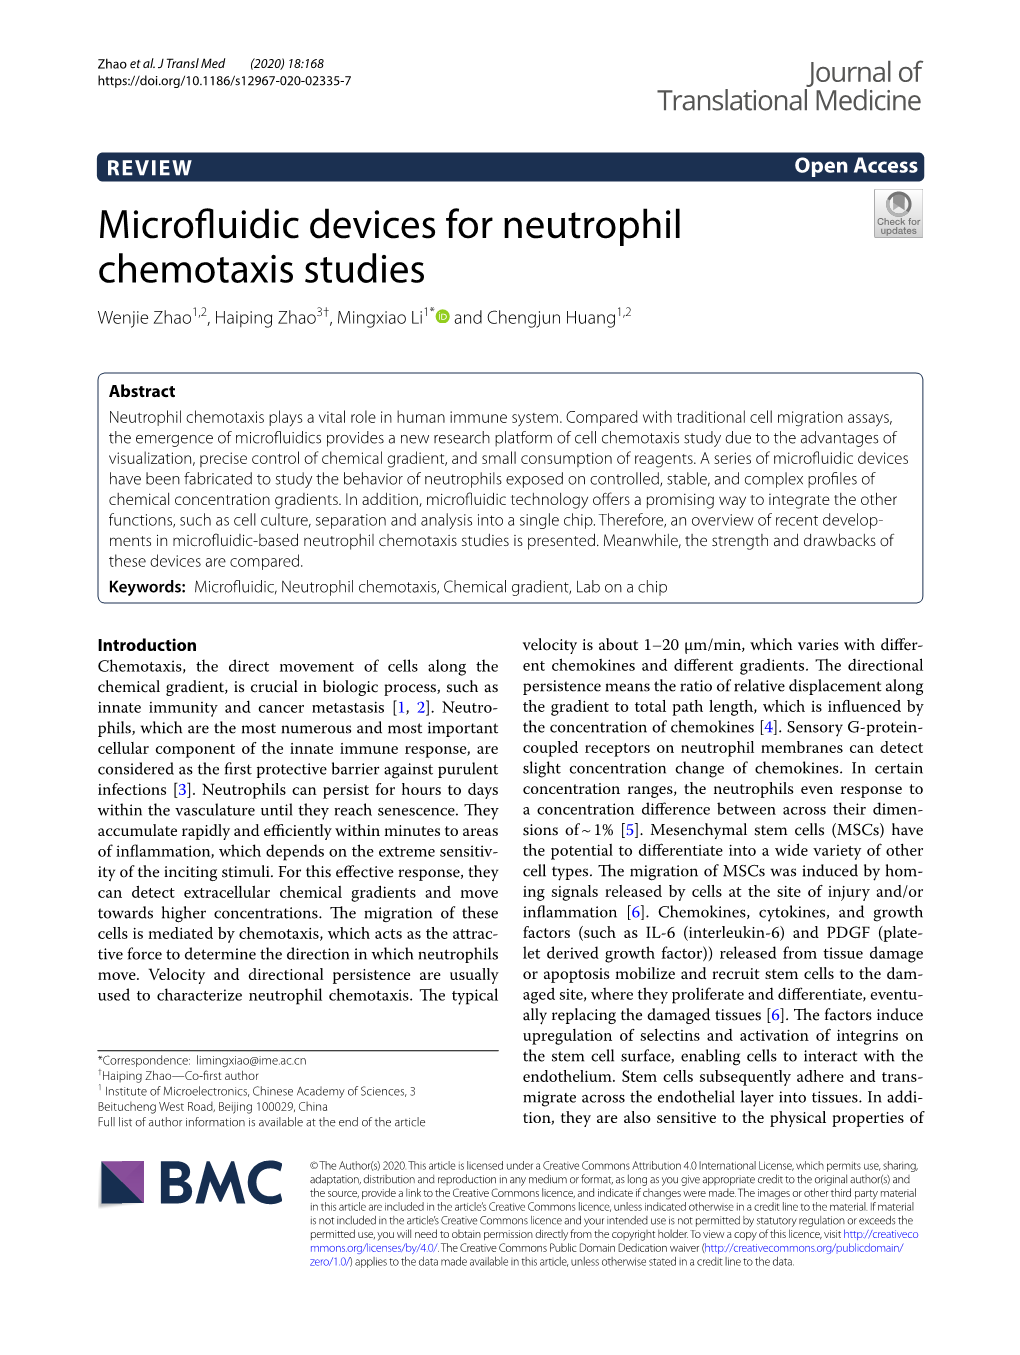 Microfluidic Devices for Neutrophil Chemotaxis Studies